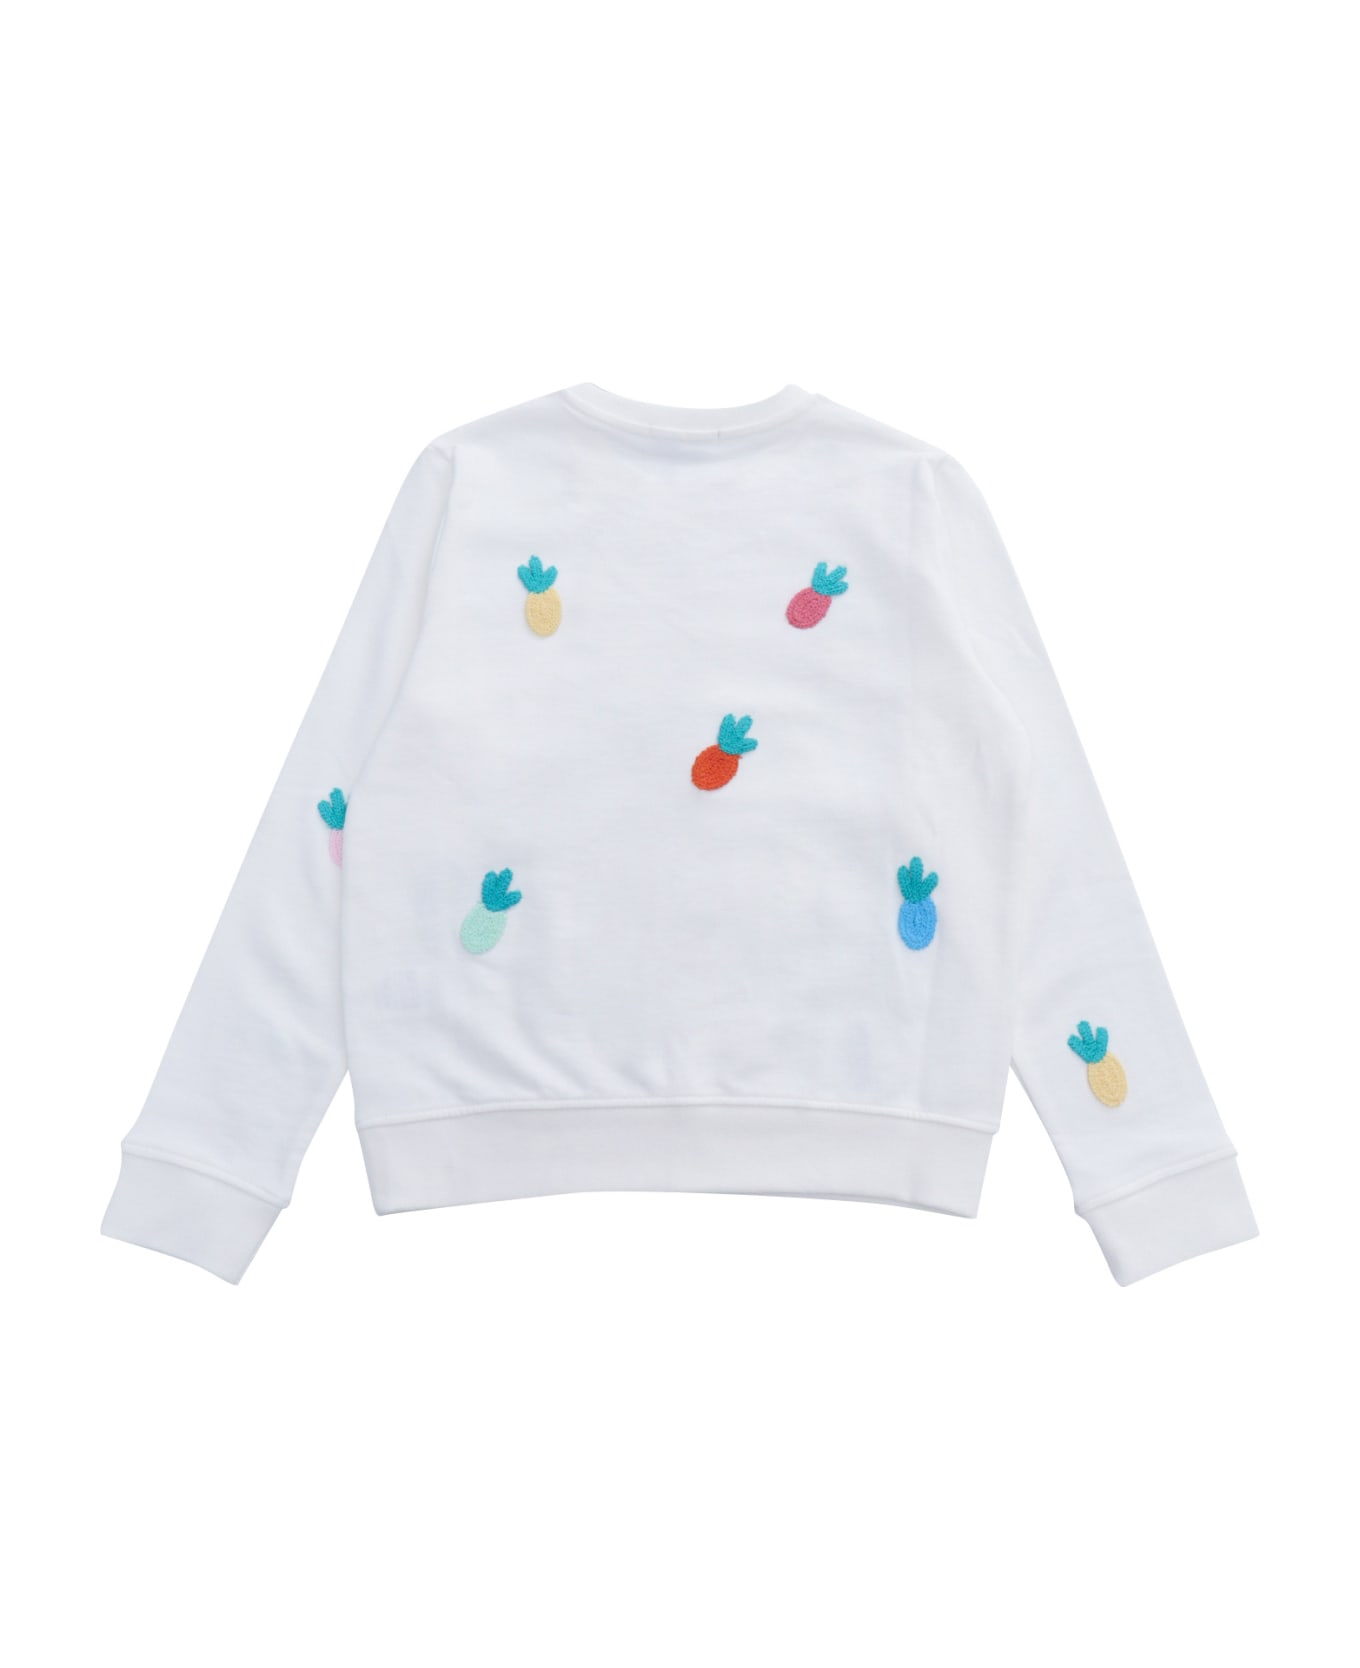 Stella McCartney Kids White Sweatshirt With Embroidery - WHITE